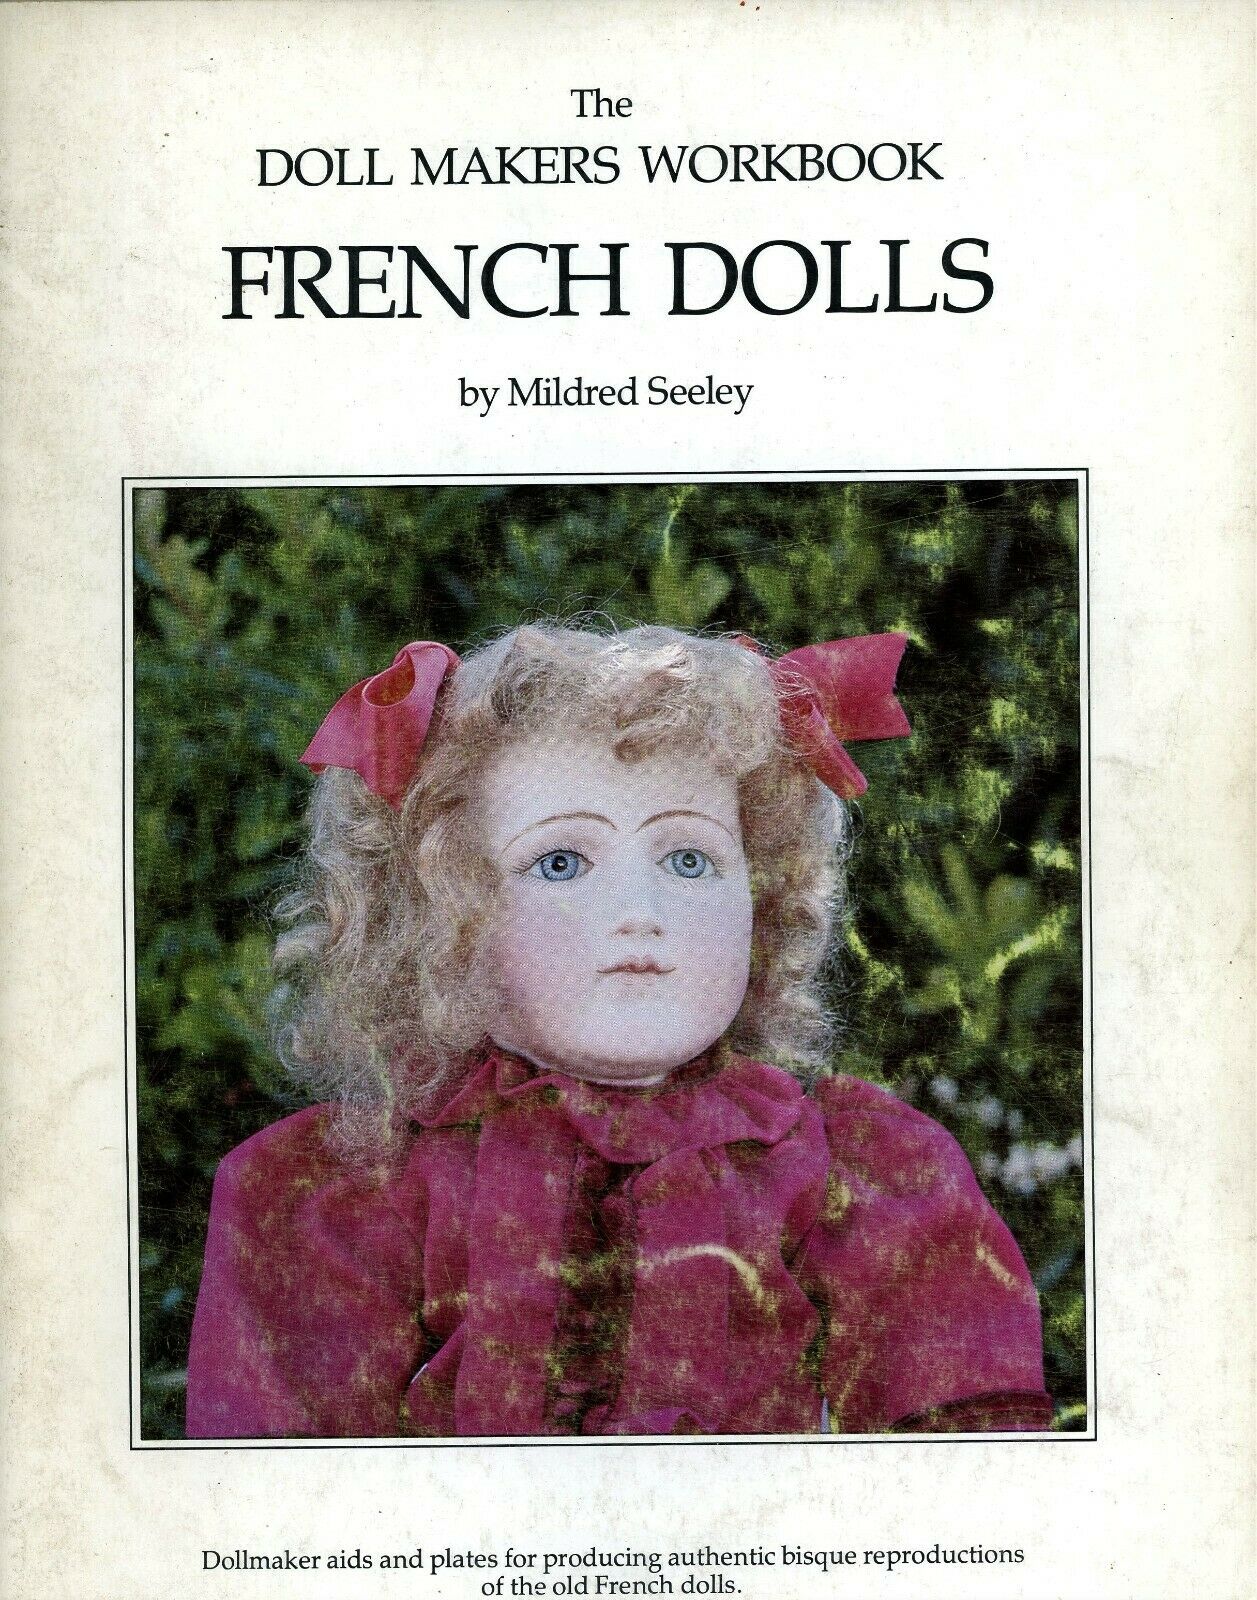 French Bisque Dolls - Making / Scarce Illustrated Dollmaker's Workbook